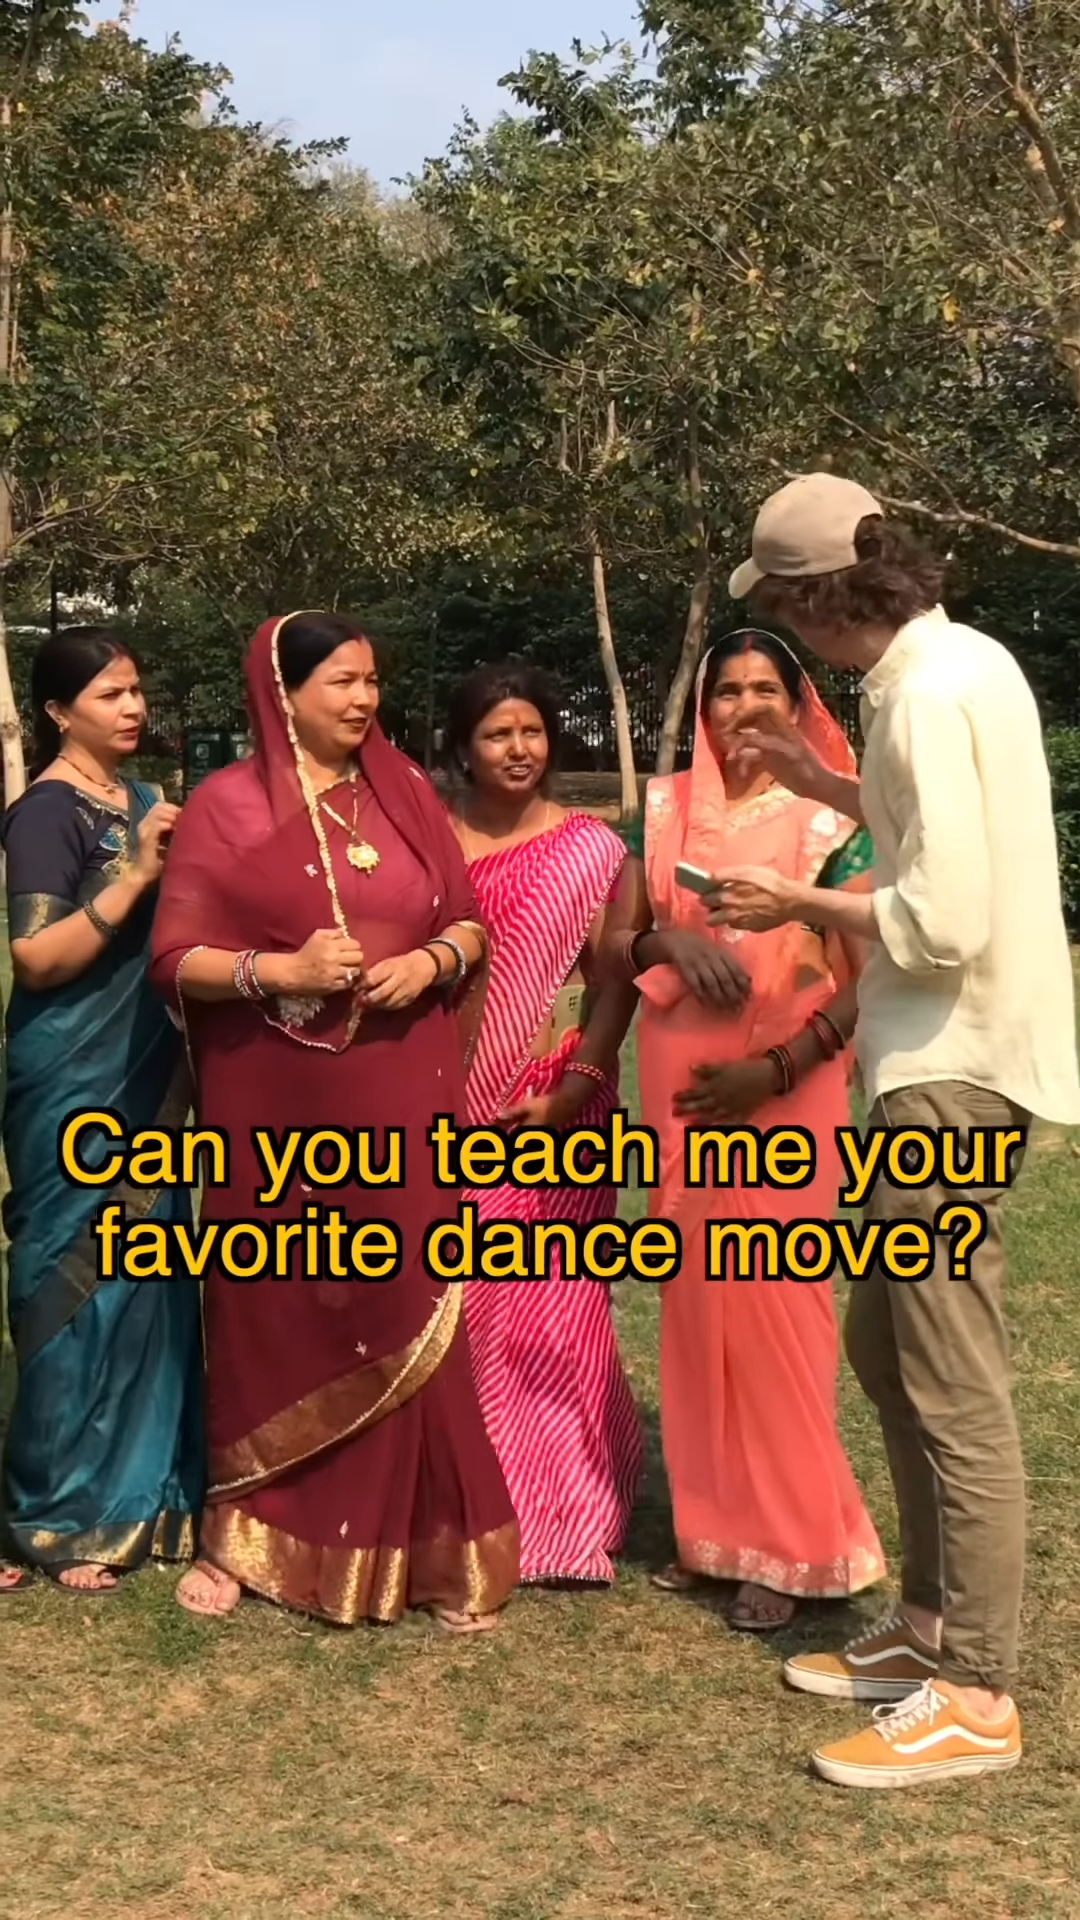 Dance videos on Instagram